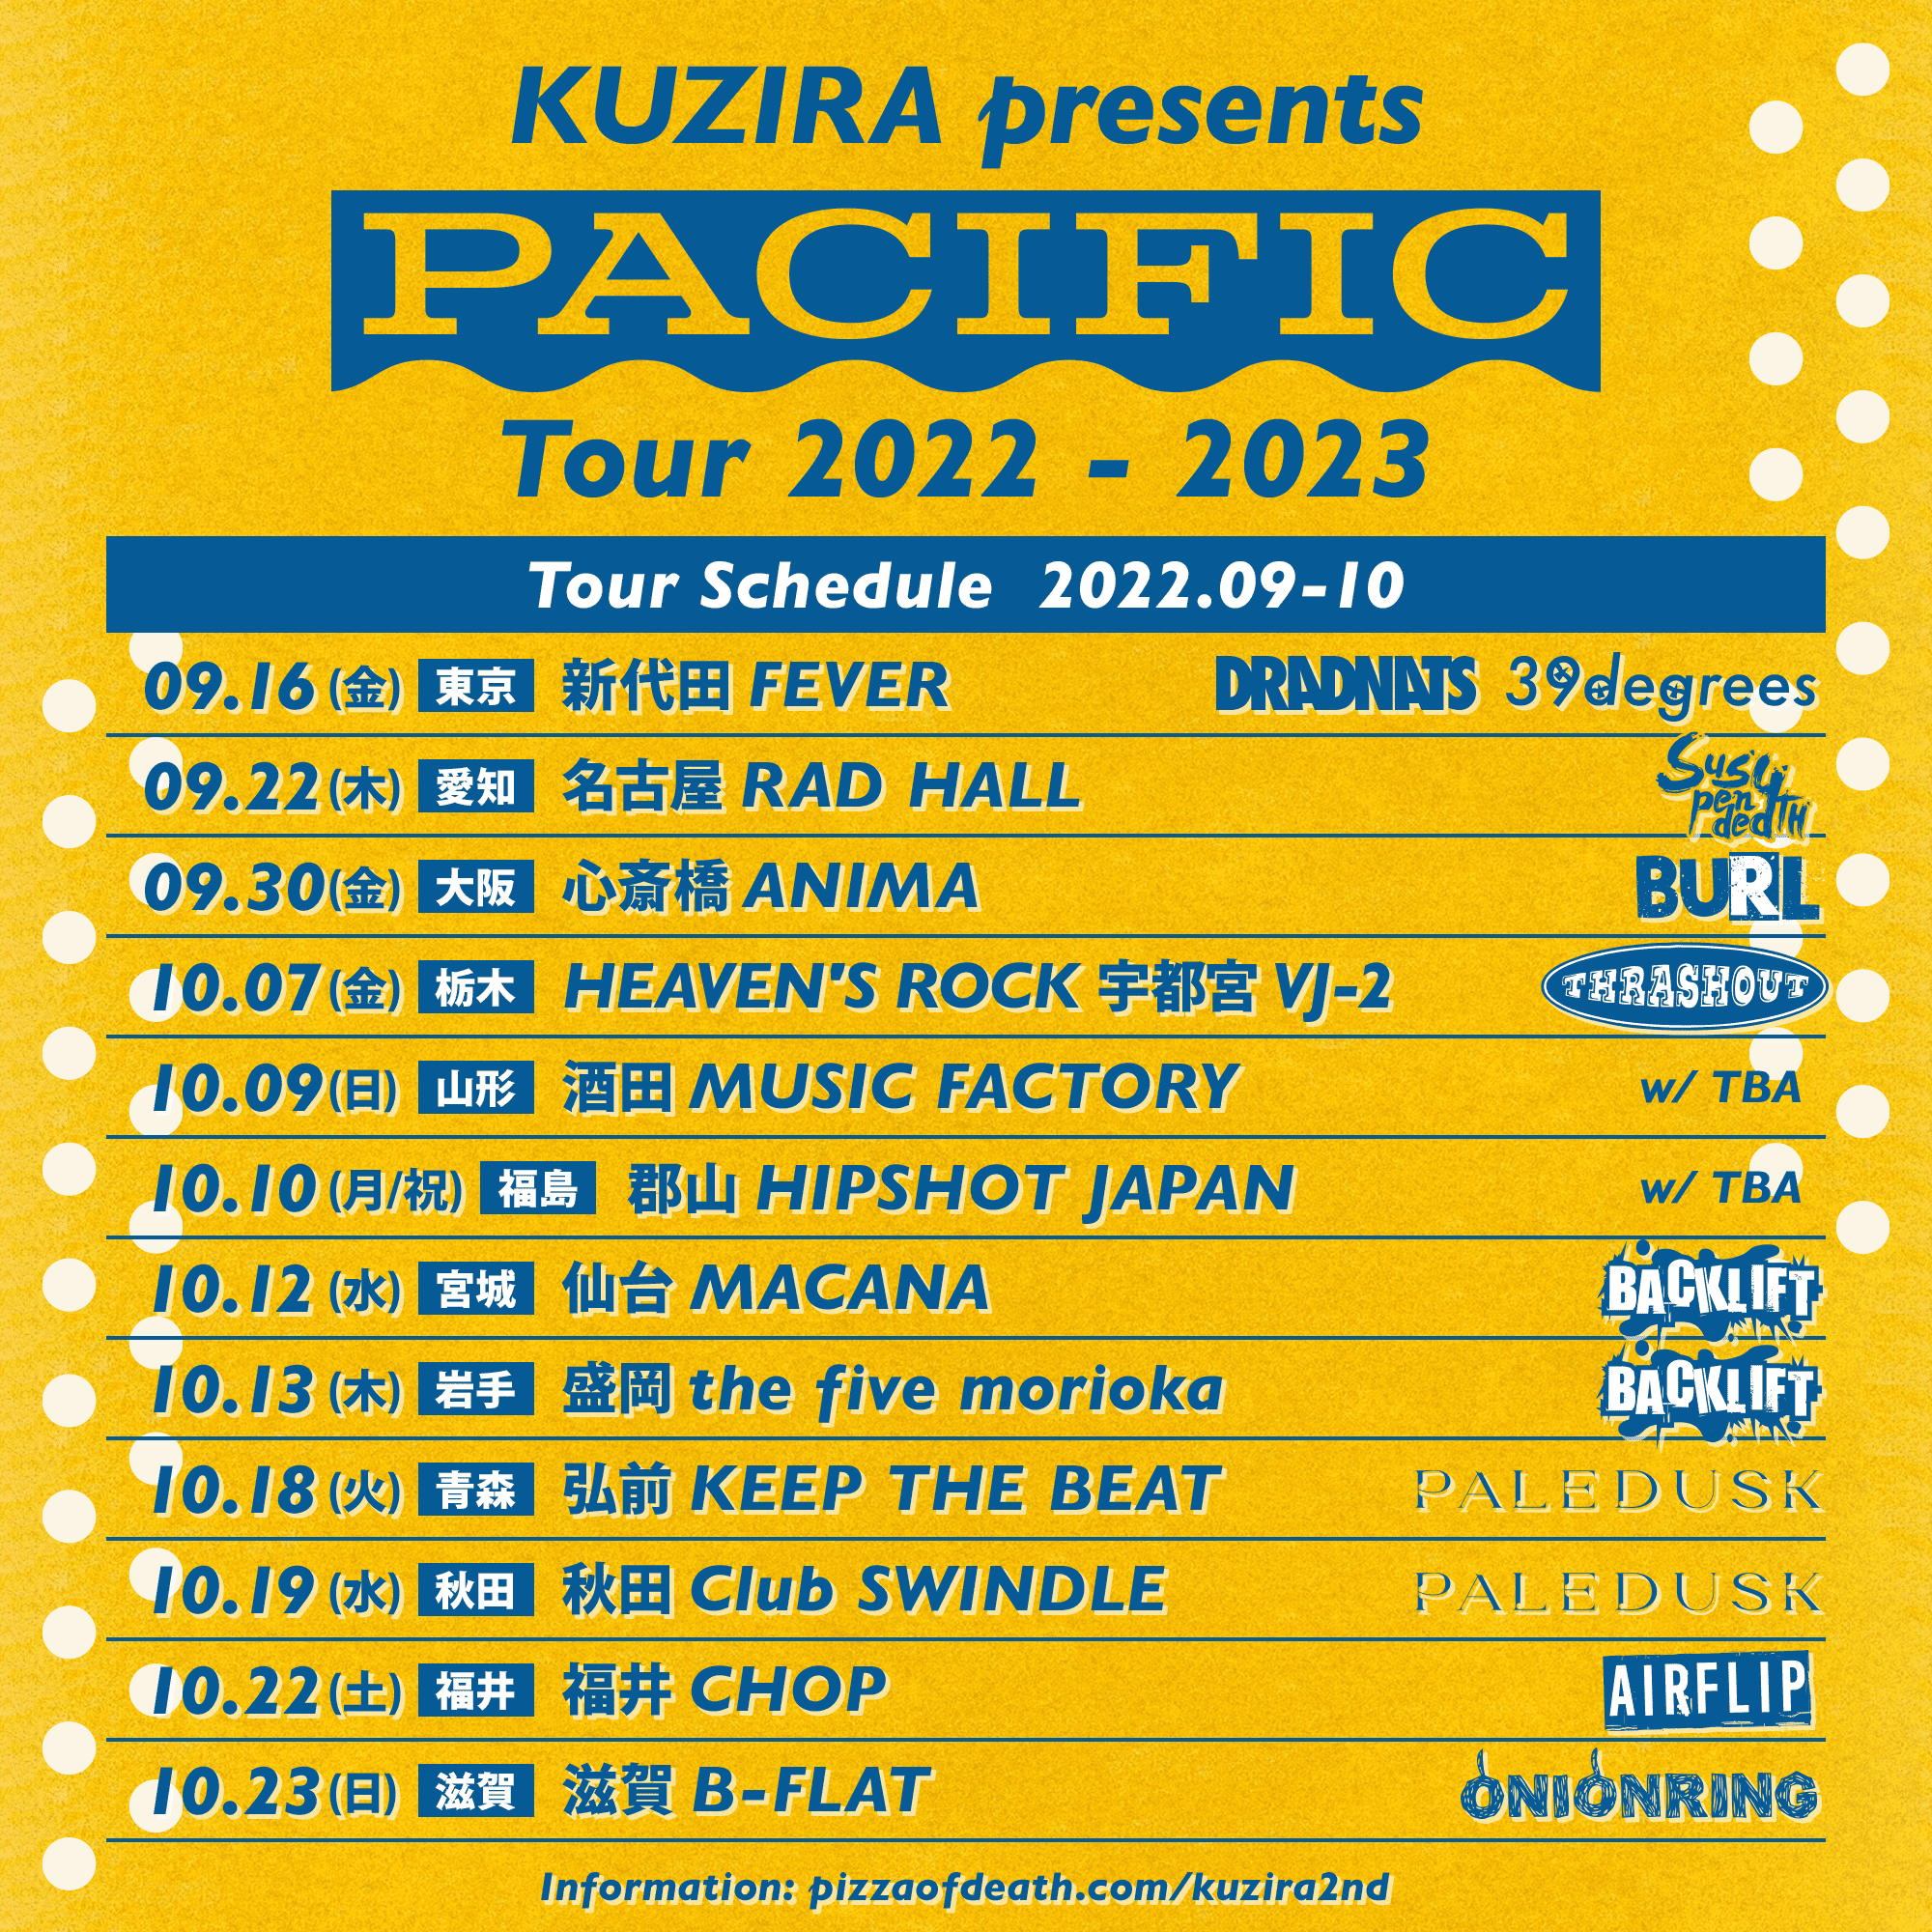 KUZIRA presents. Pacific Tour 200-2023